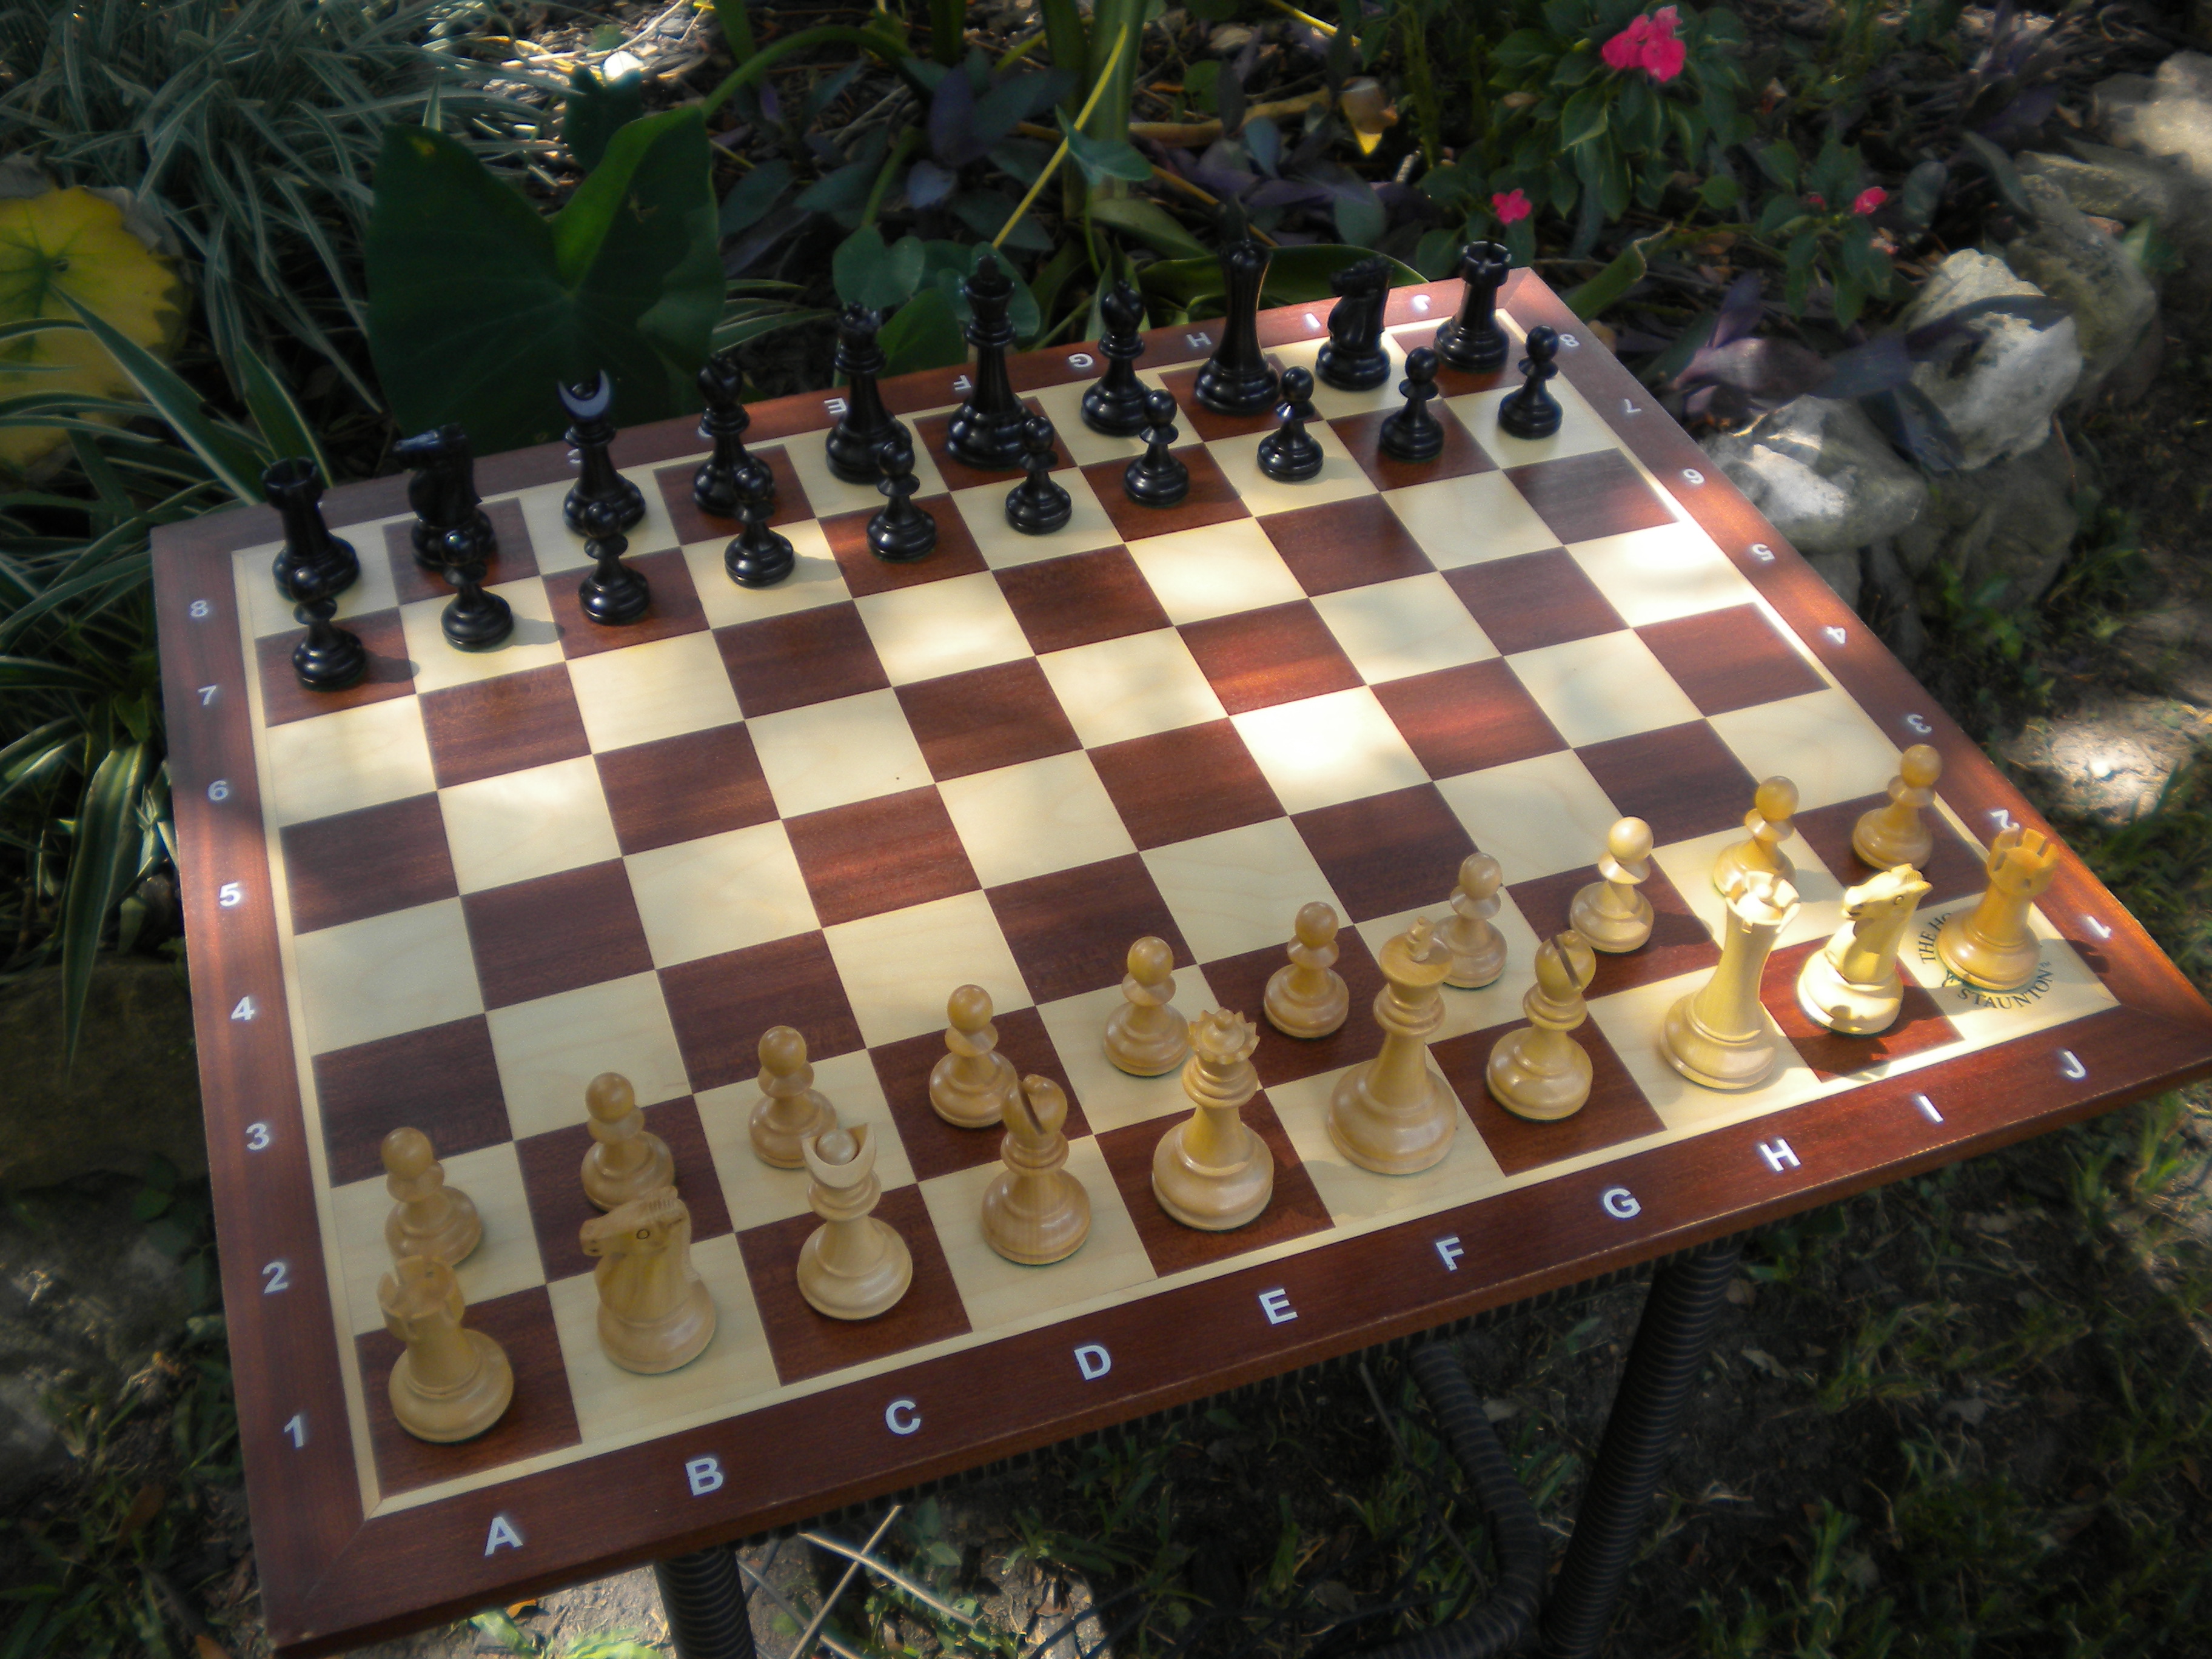 Capablanca chess set